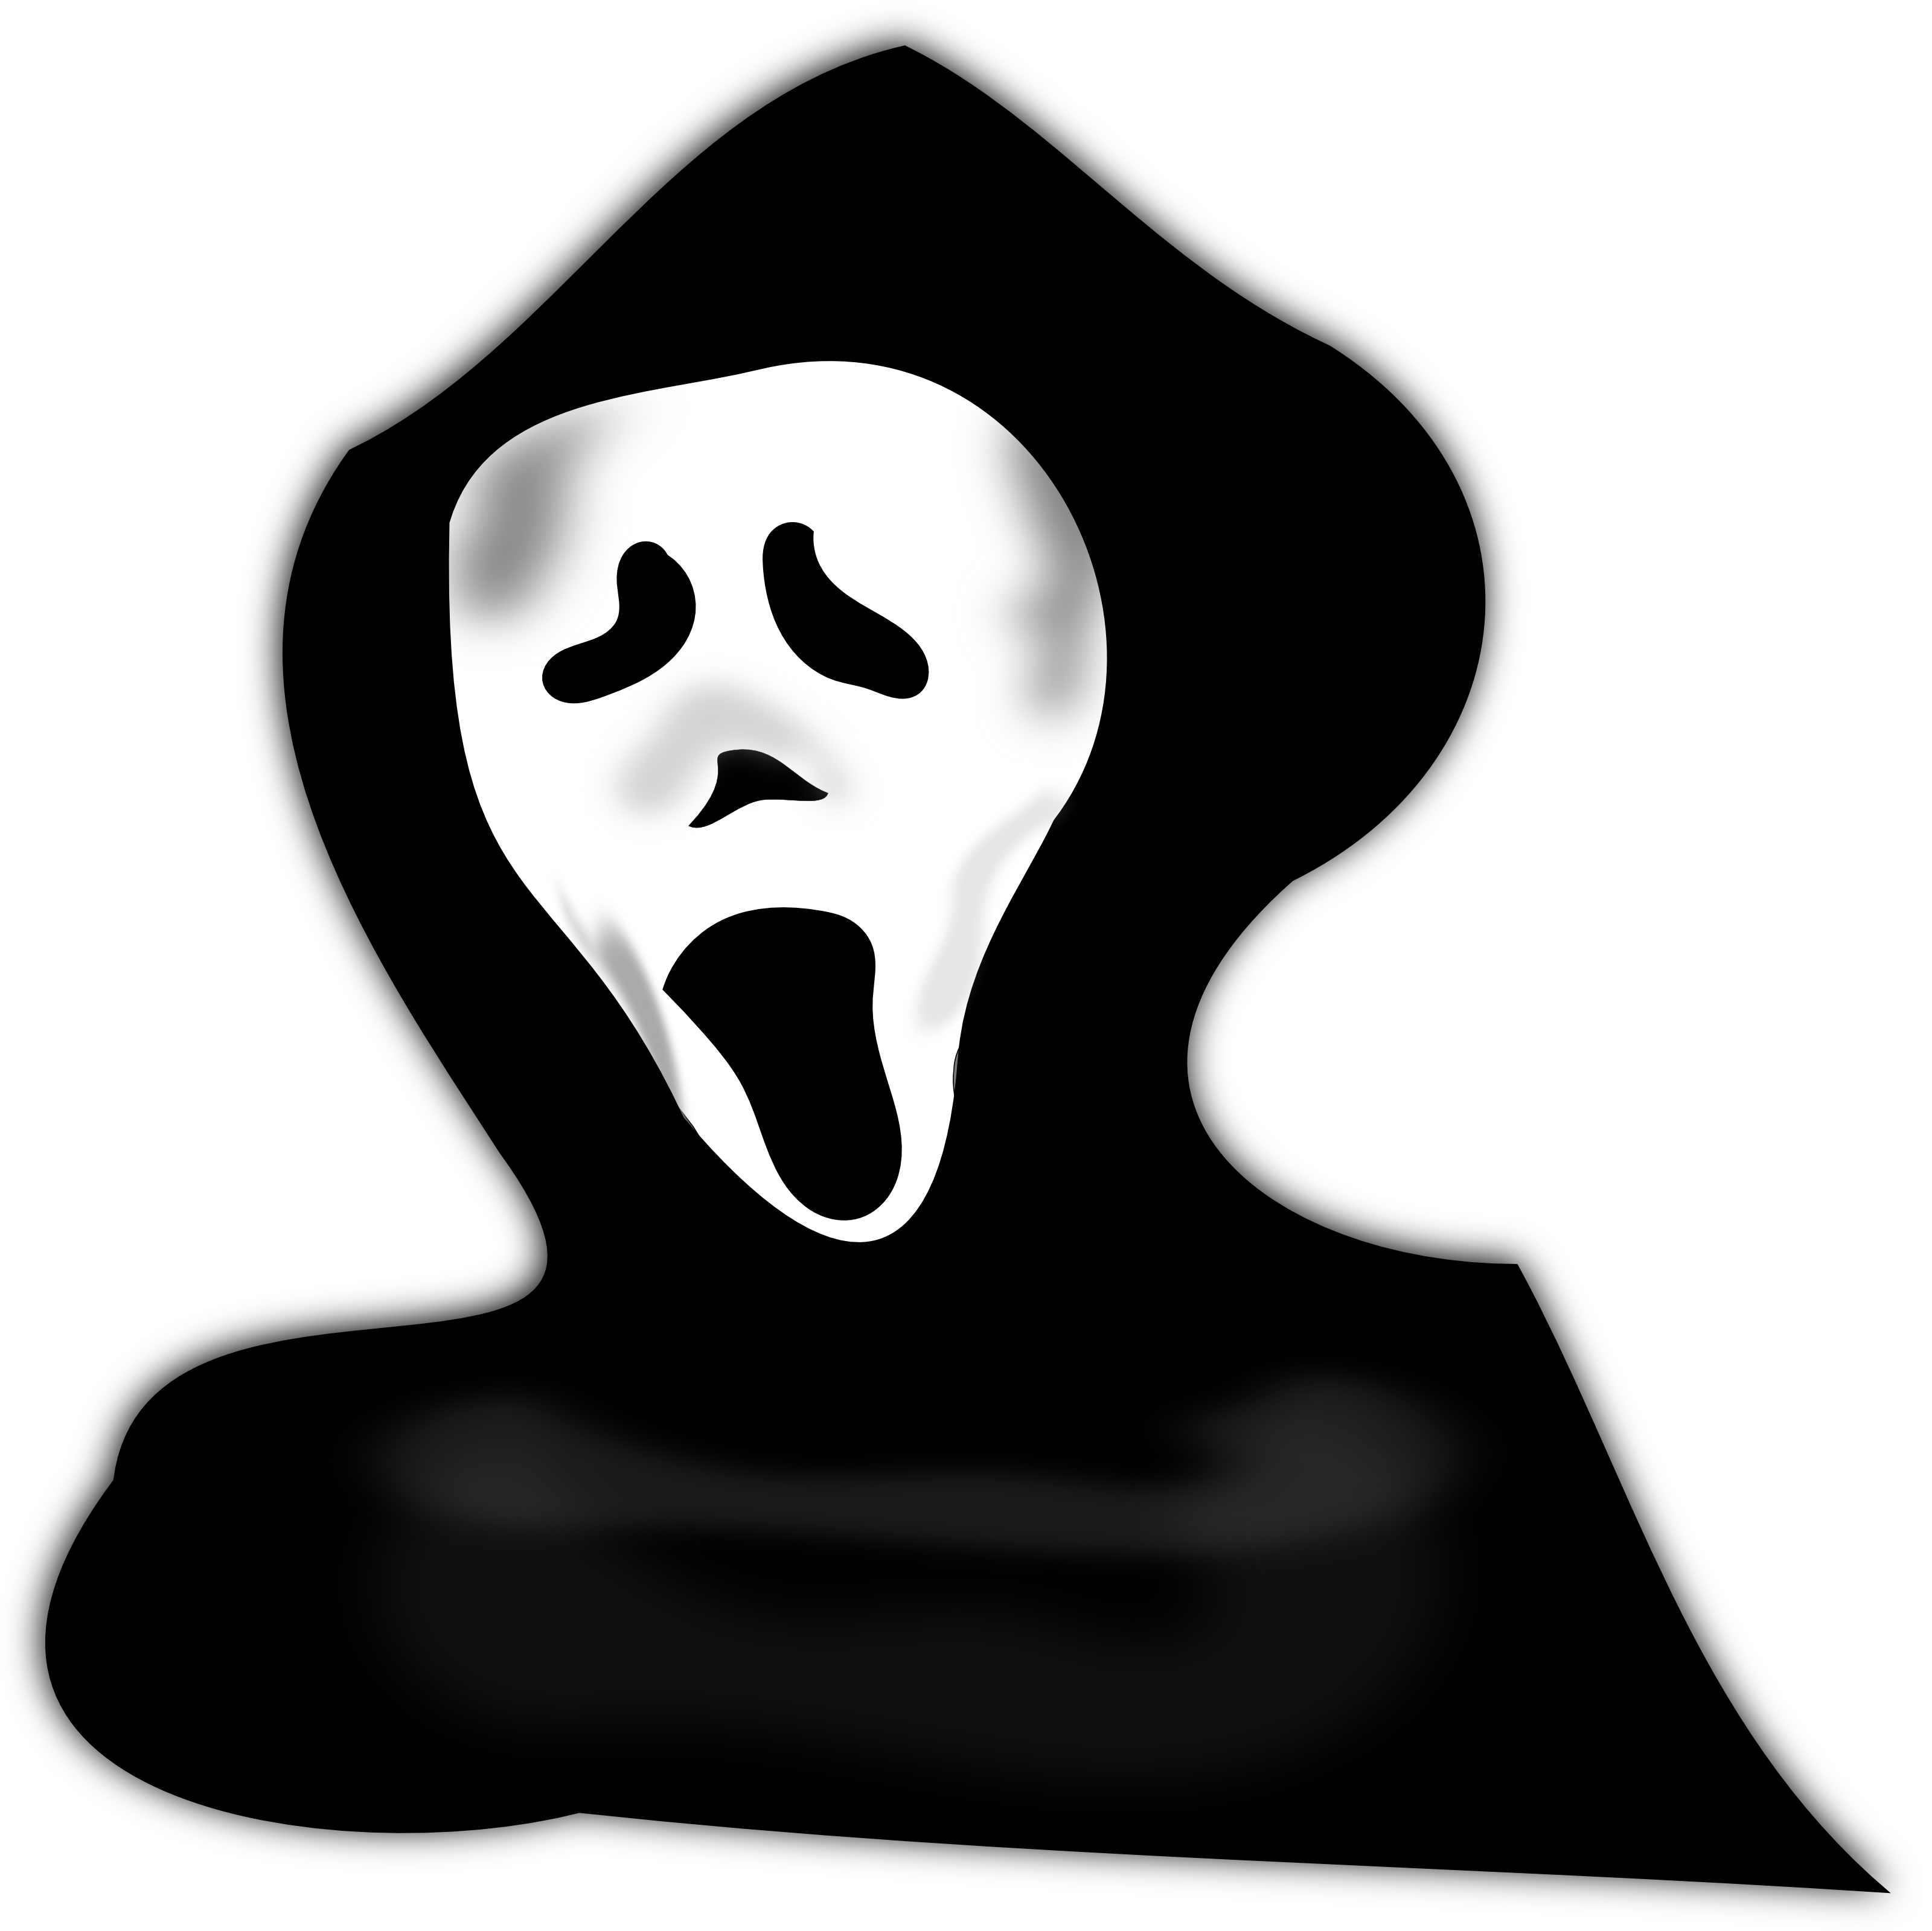 Haunting Halloween Ghost Free Clipart Illustration.